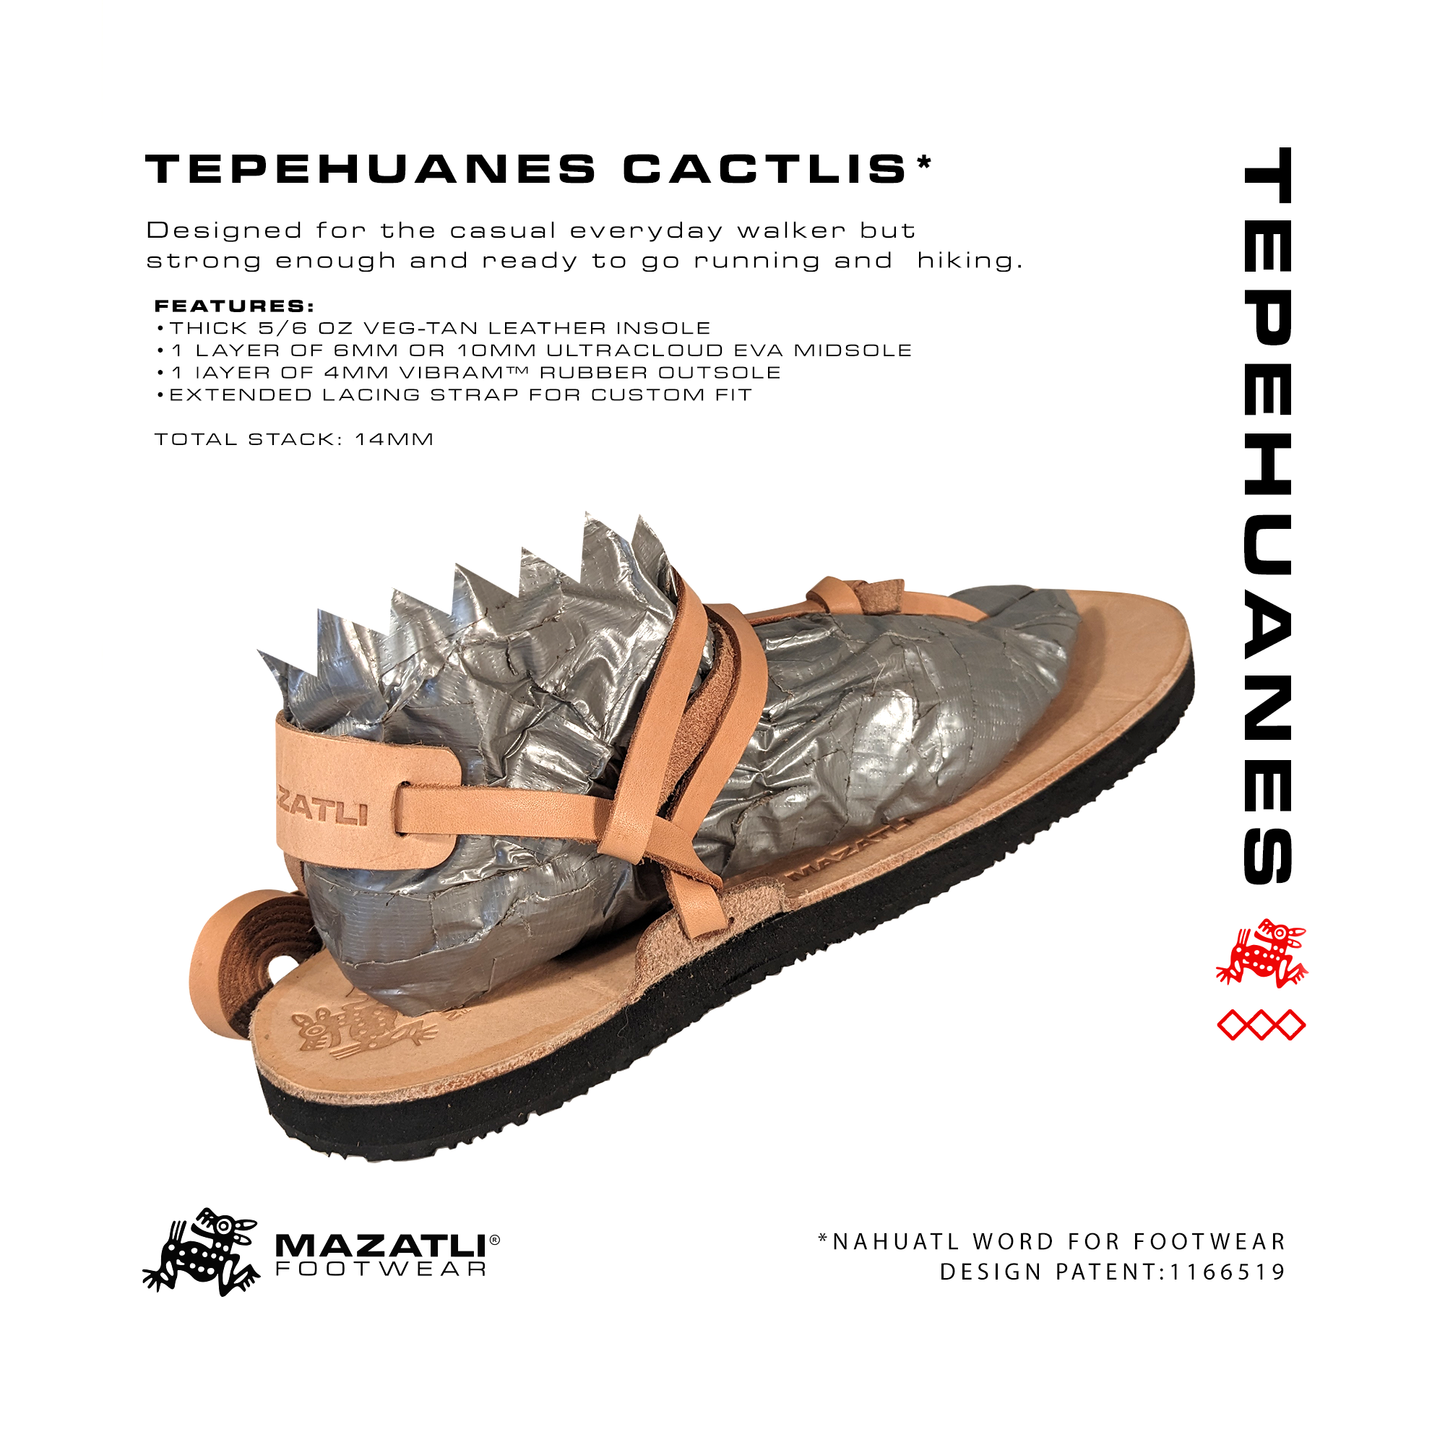 Mazatli "Tepehuanes" Running Huaraches Cactlis